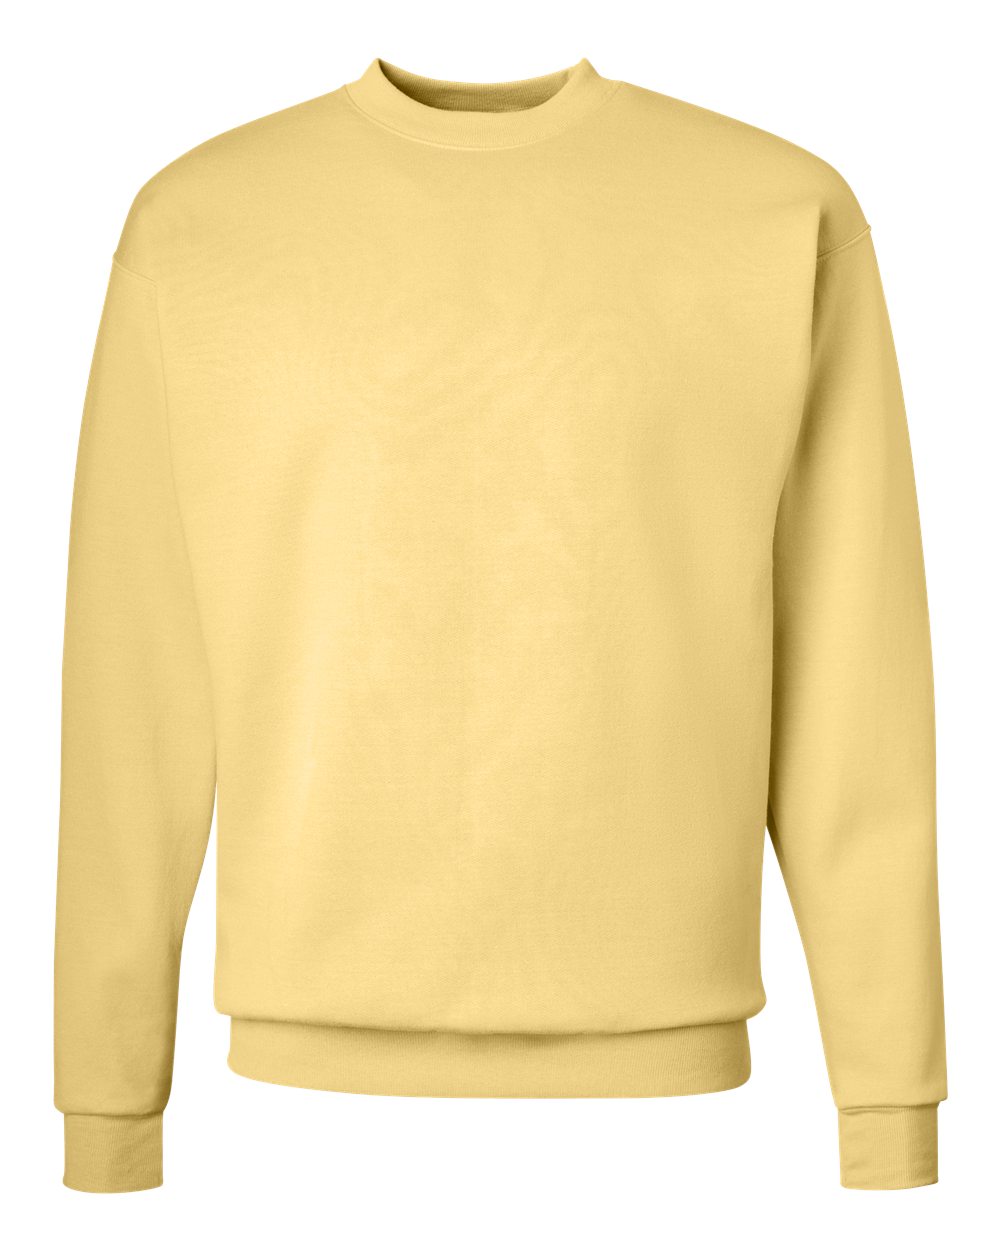 Hanes - ComfortBlend EcoSmart Crewneck Sweatshirt - P160 | eBay